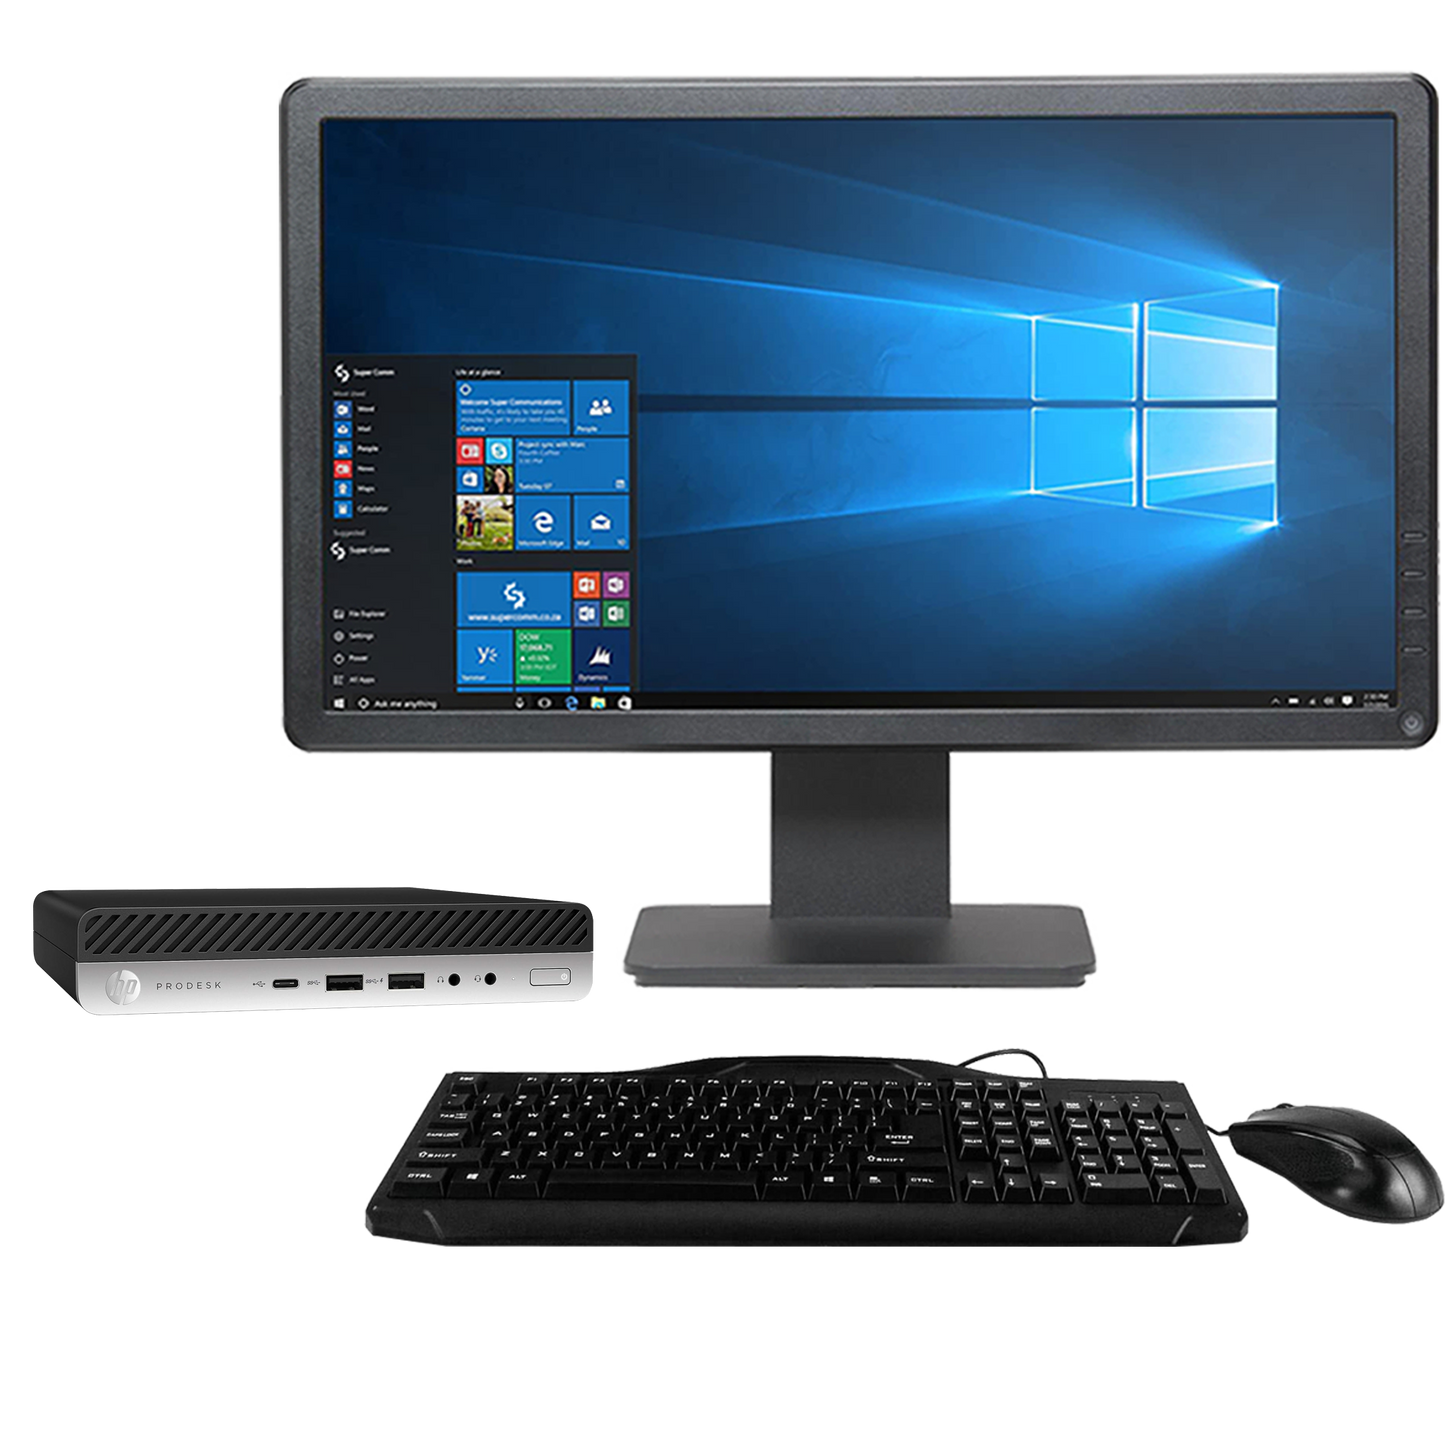 HP ProDesk 600 G3 Intel i5, 6th Gen USFF PC with 8GB Ram + 20" Monitor